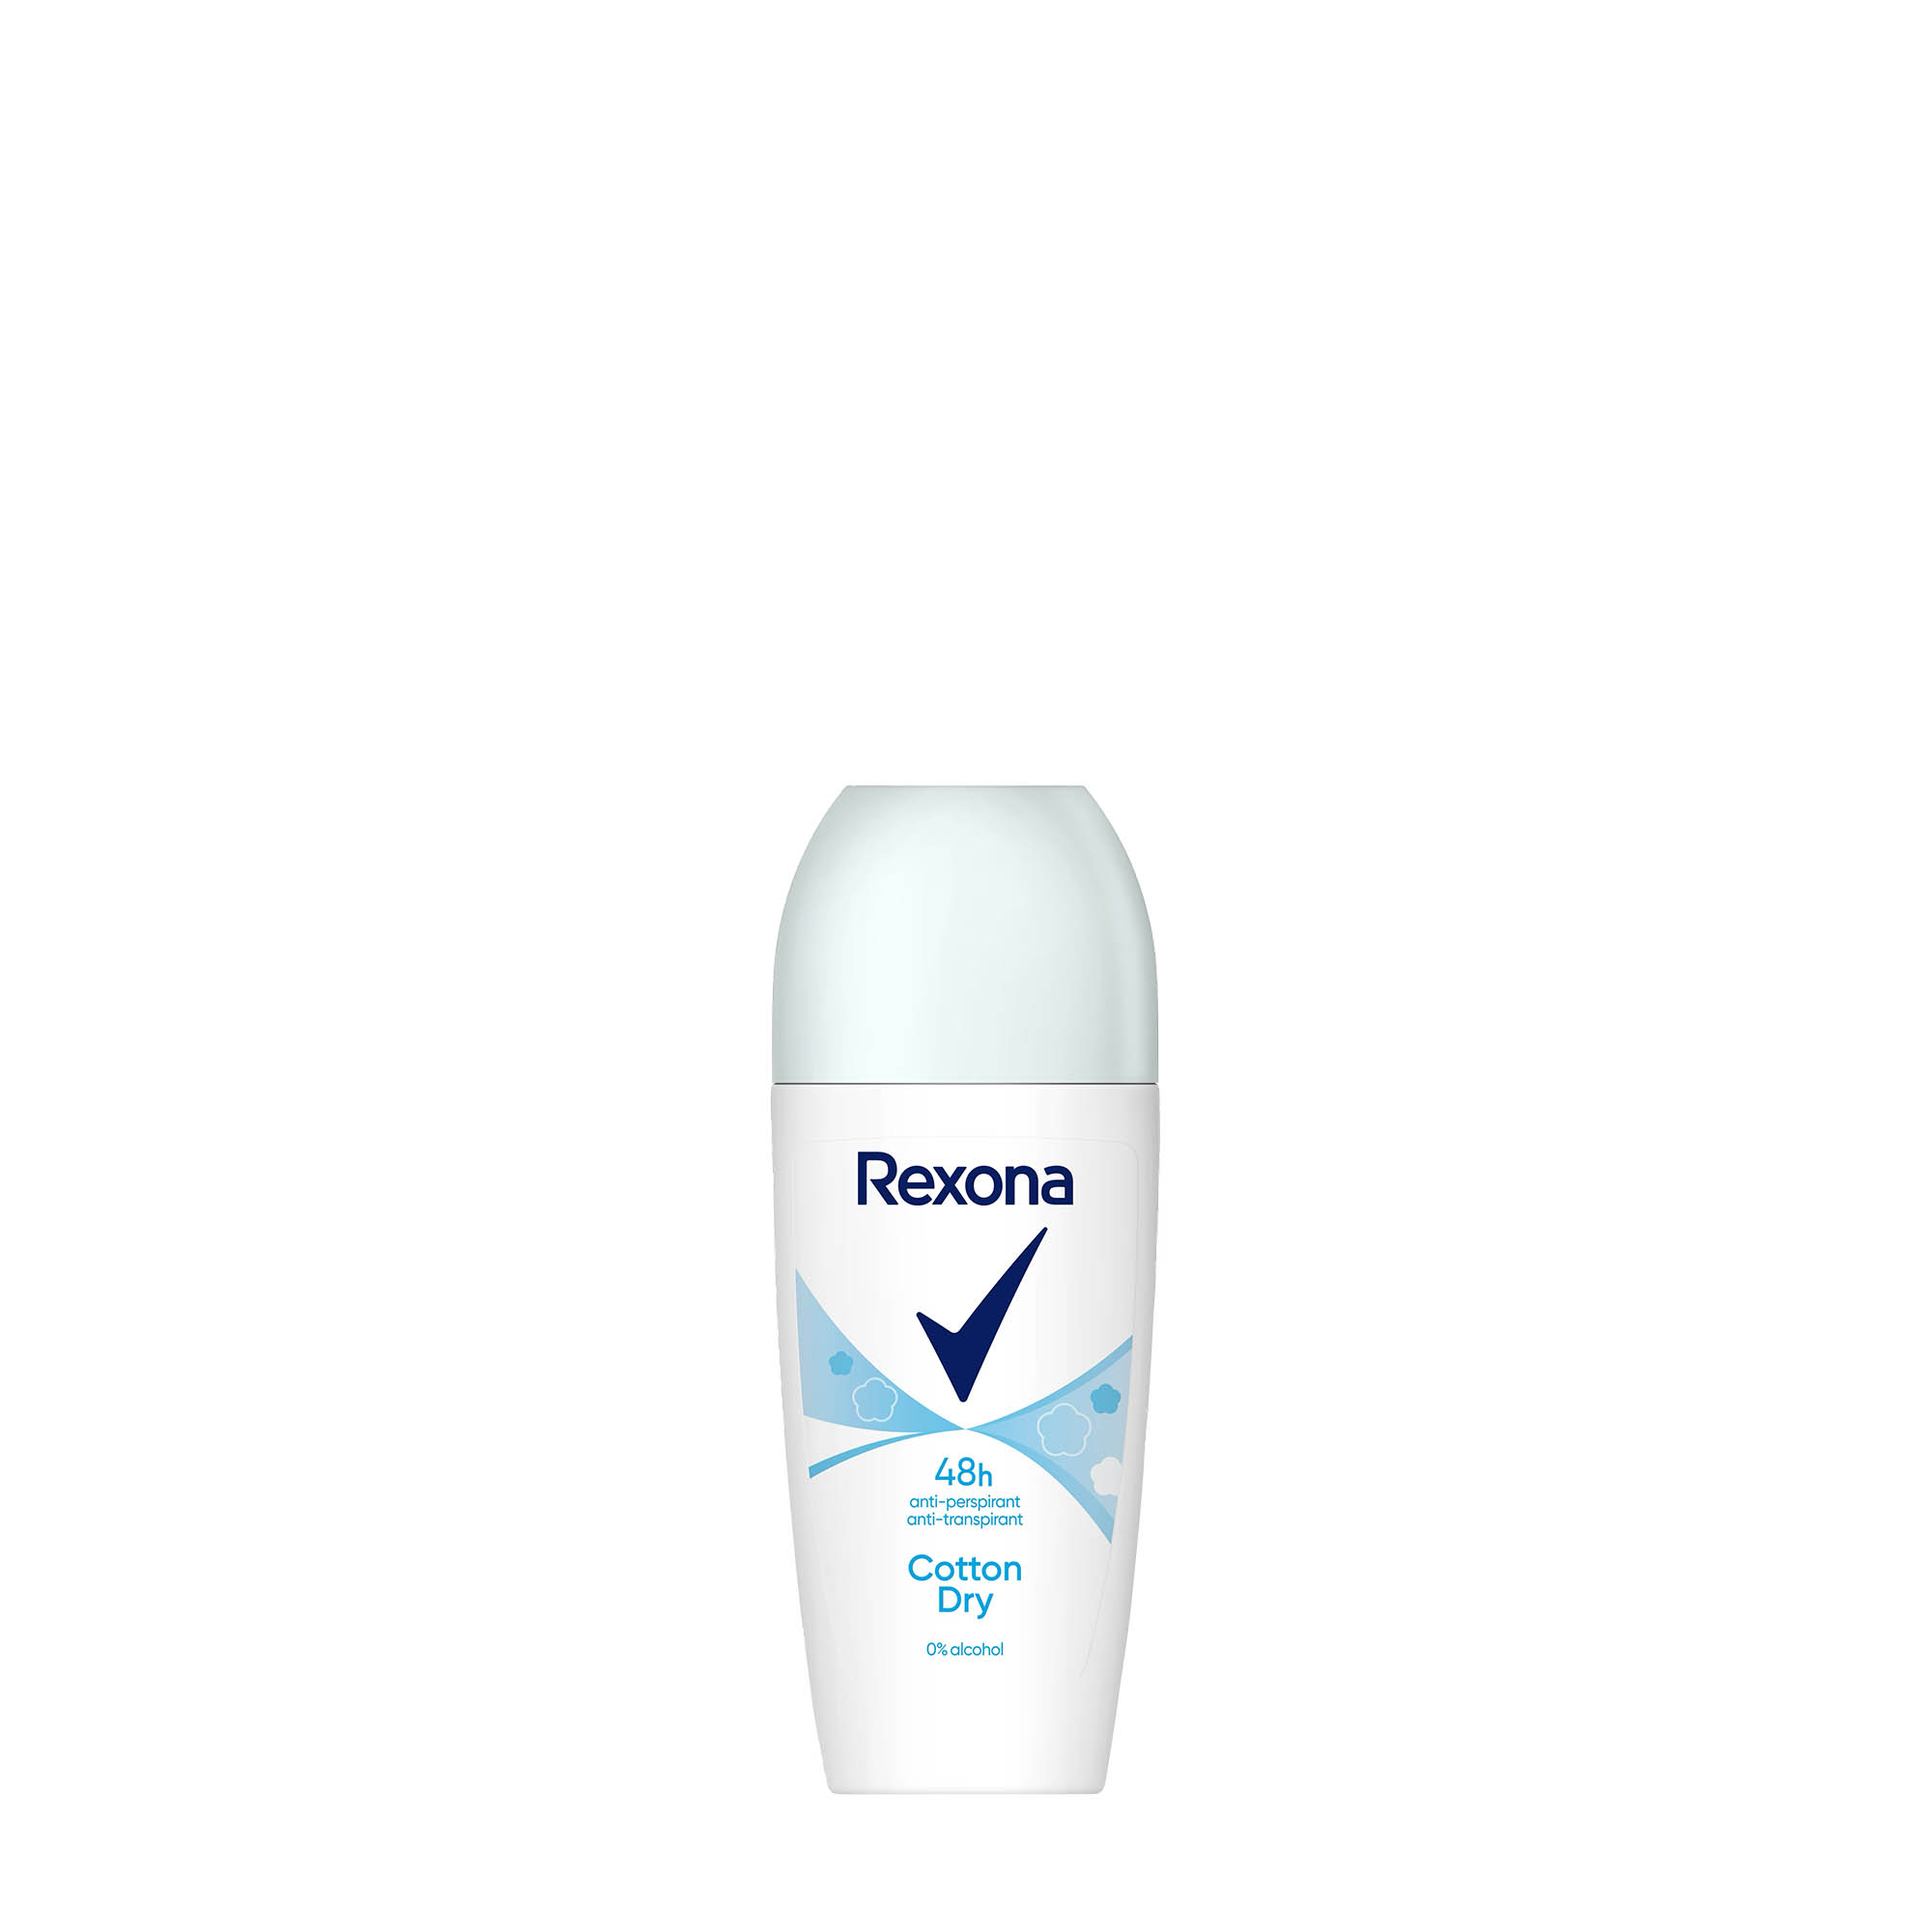 Rexona Deodorant Roll-On cotton dry 48h anti-perspirant, 50 mL – Peppery  Spot